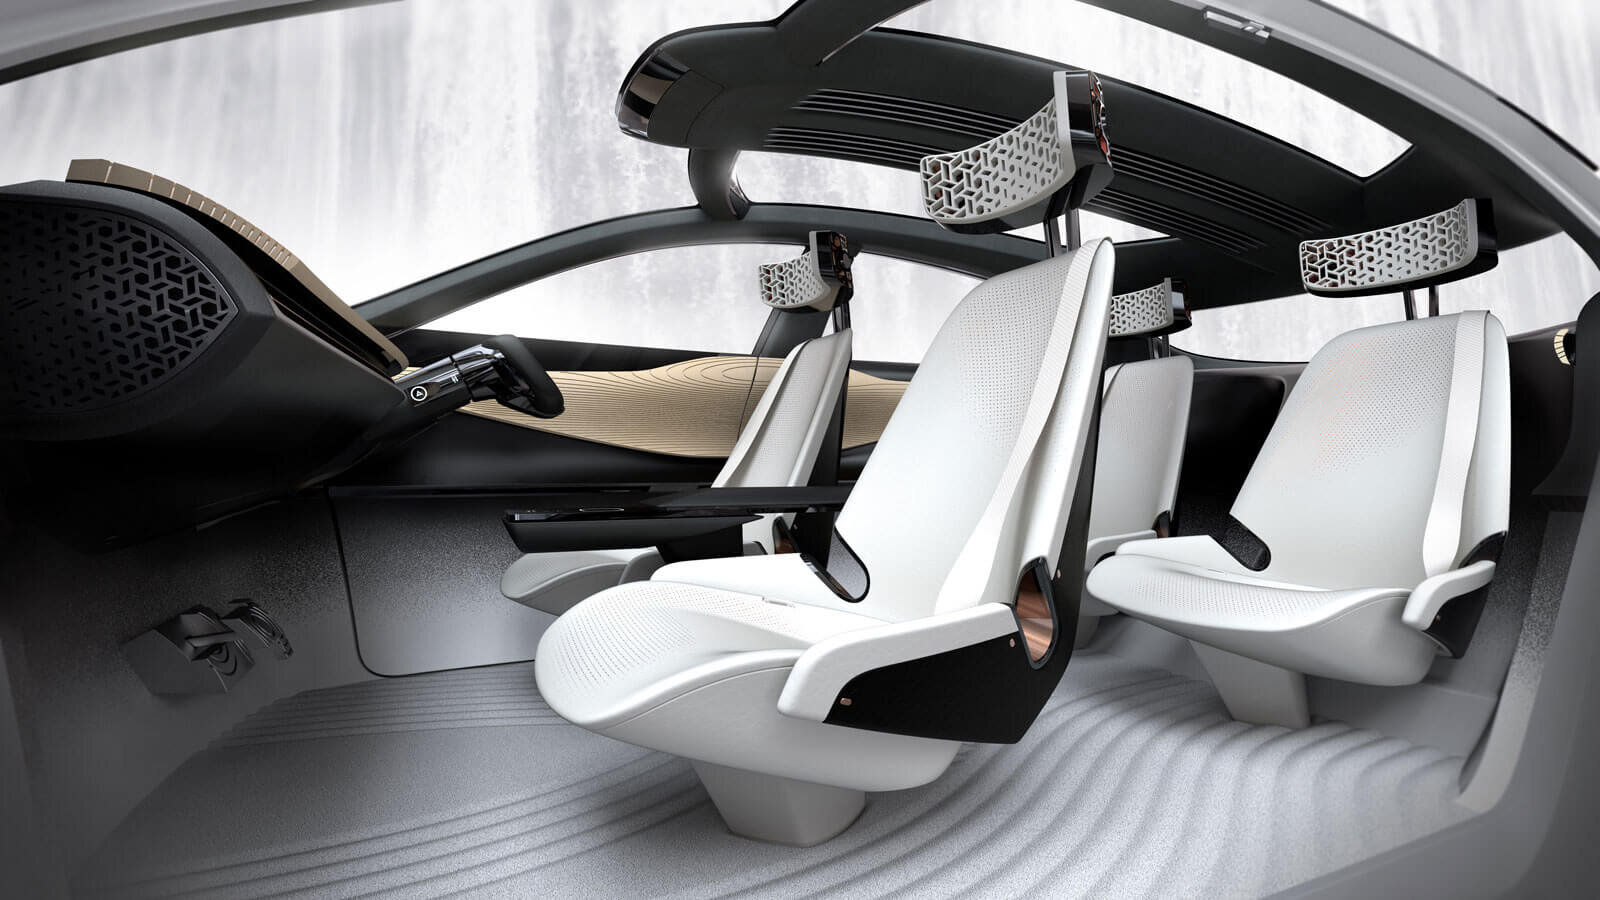 Nissan-IMx-Concept-Interior-01 (1) (1).jpg